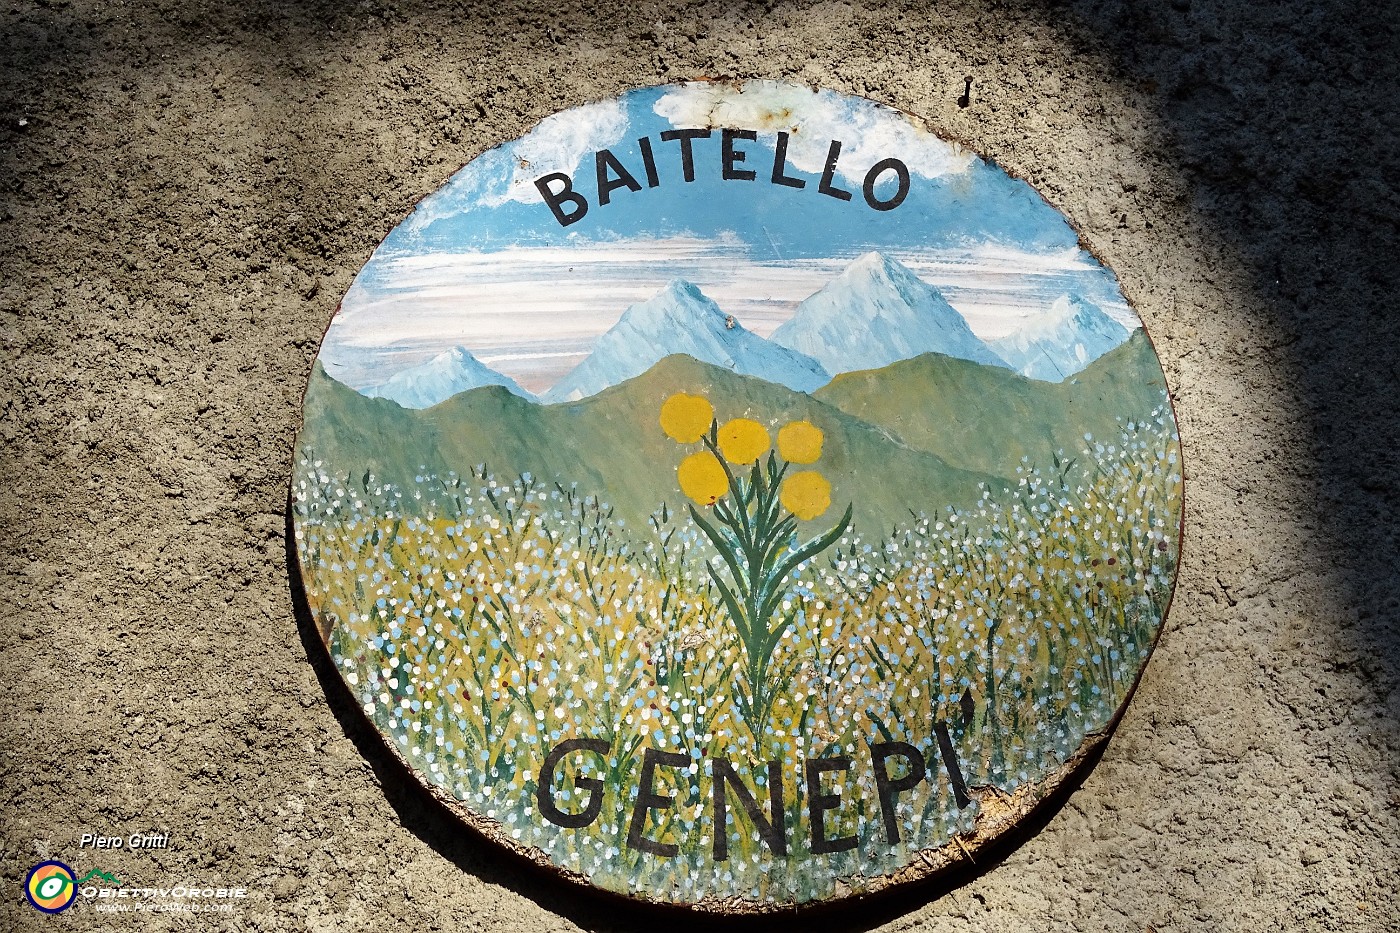 16 Uno stemma del Baitello Genepi.JPG